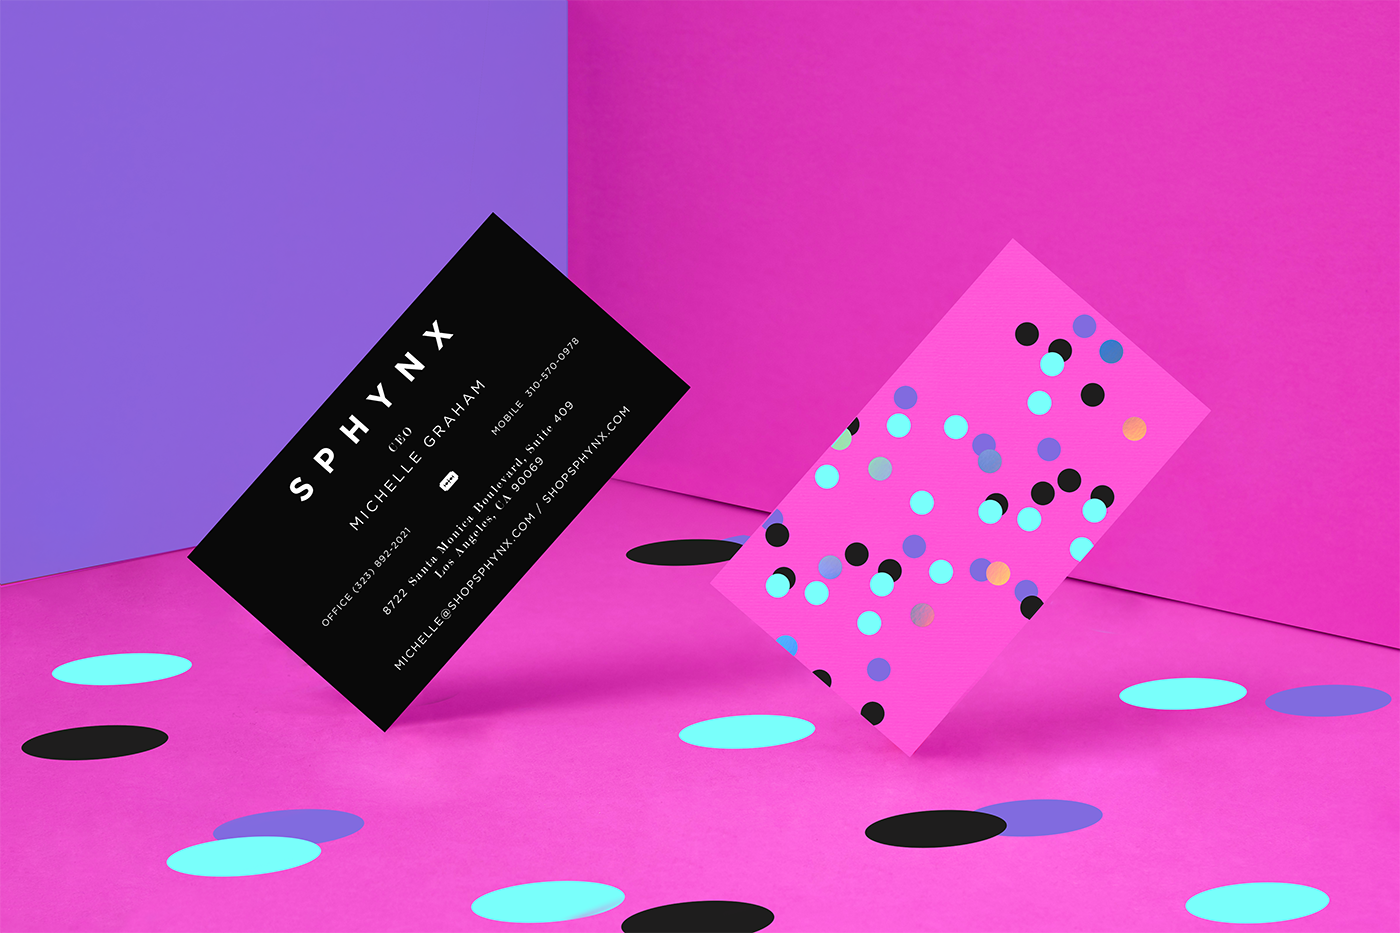 sphynx Razor beauty Packaging polkadot shaving purple pink holographic